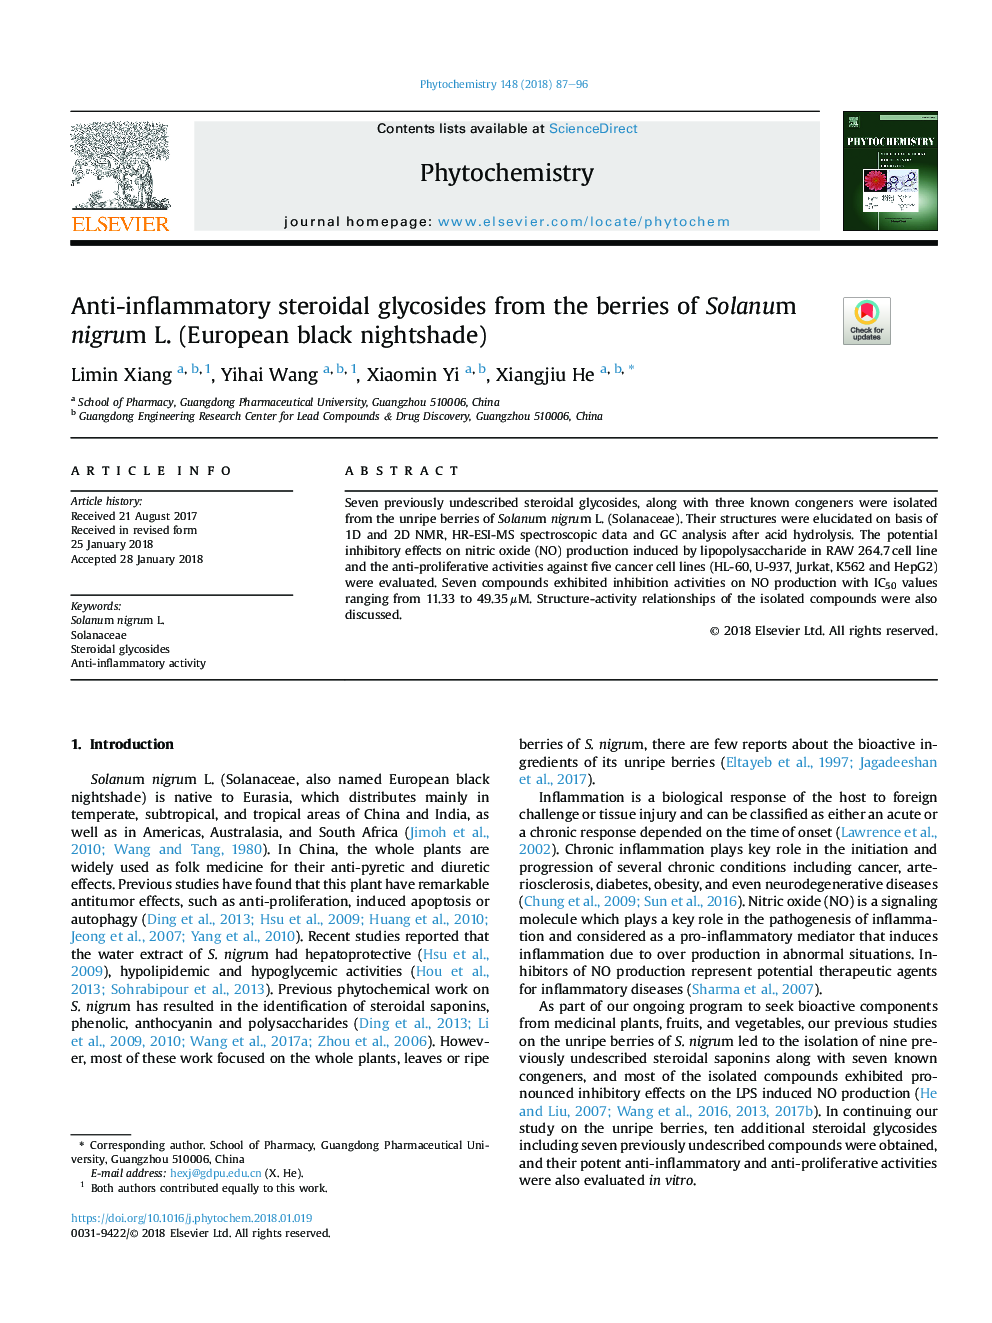 Anti-inflammatory steroidal glycosides from the berries of Solanum nigrum L. (European black nightshade)